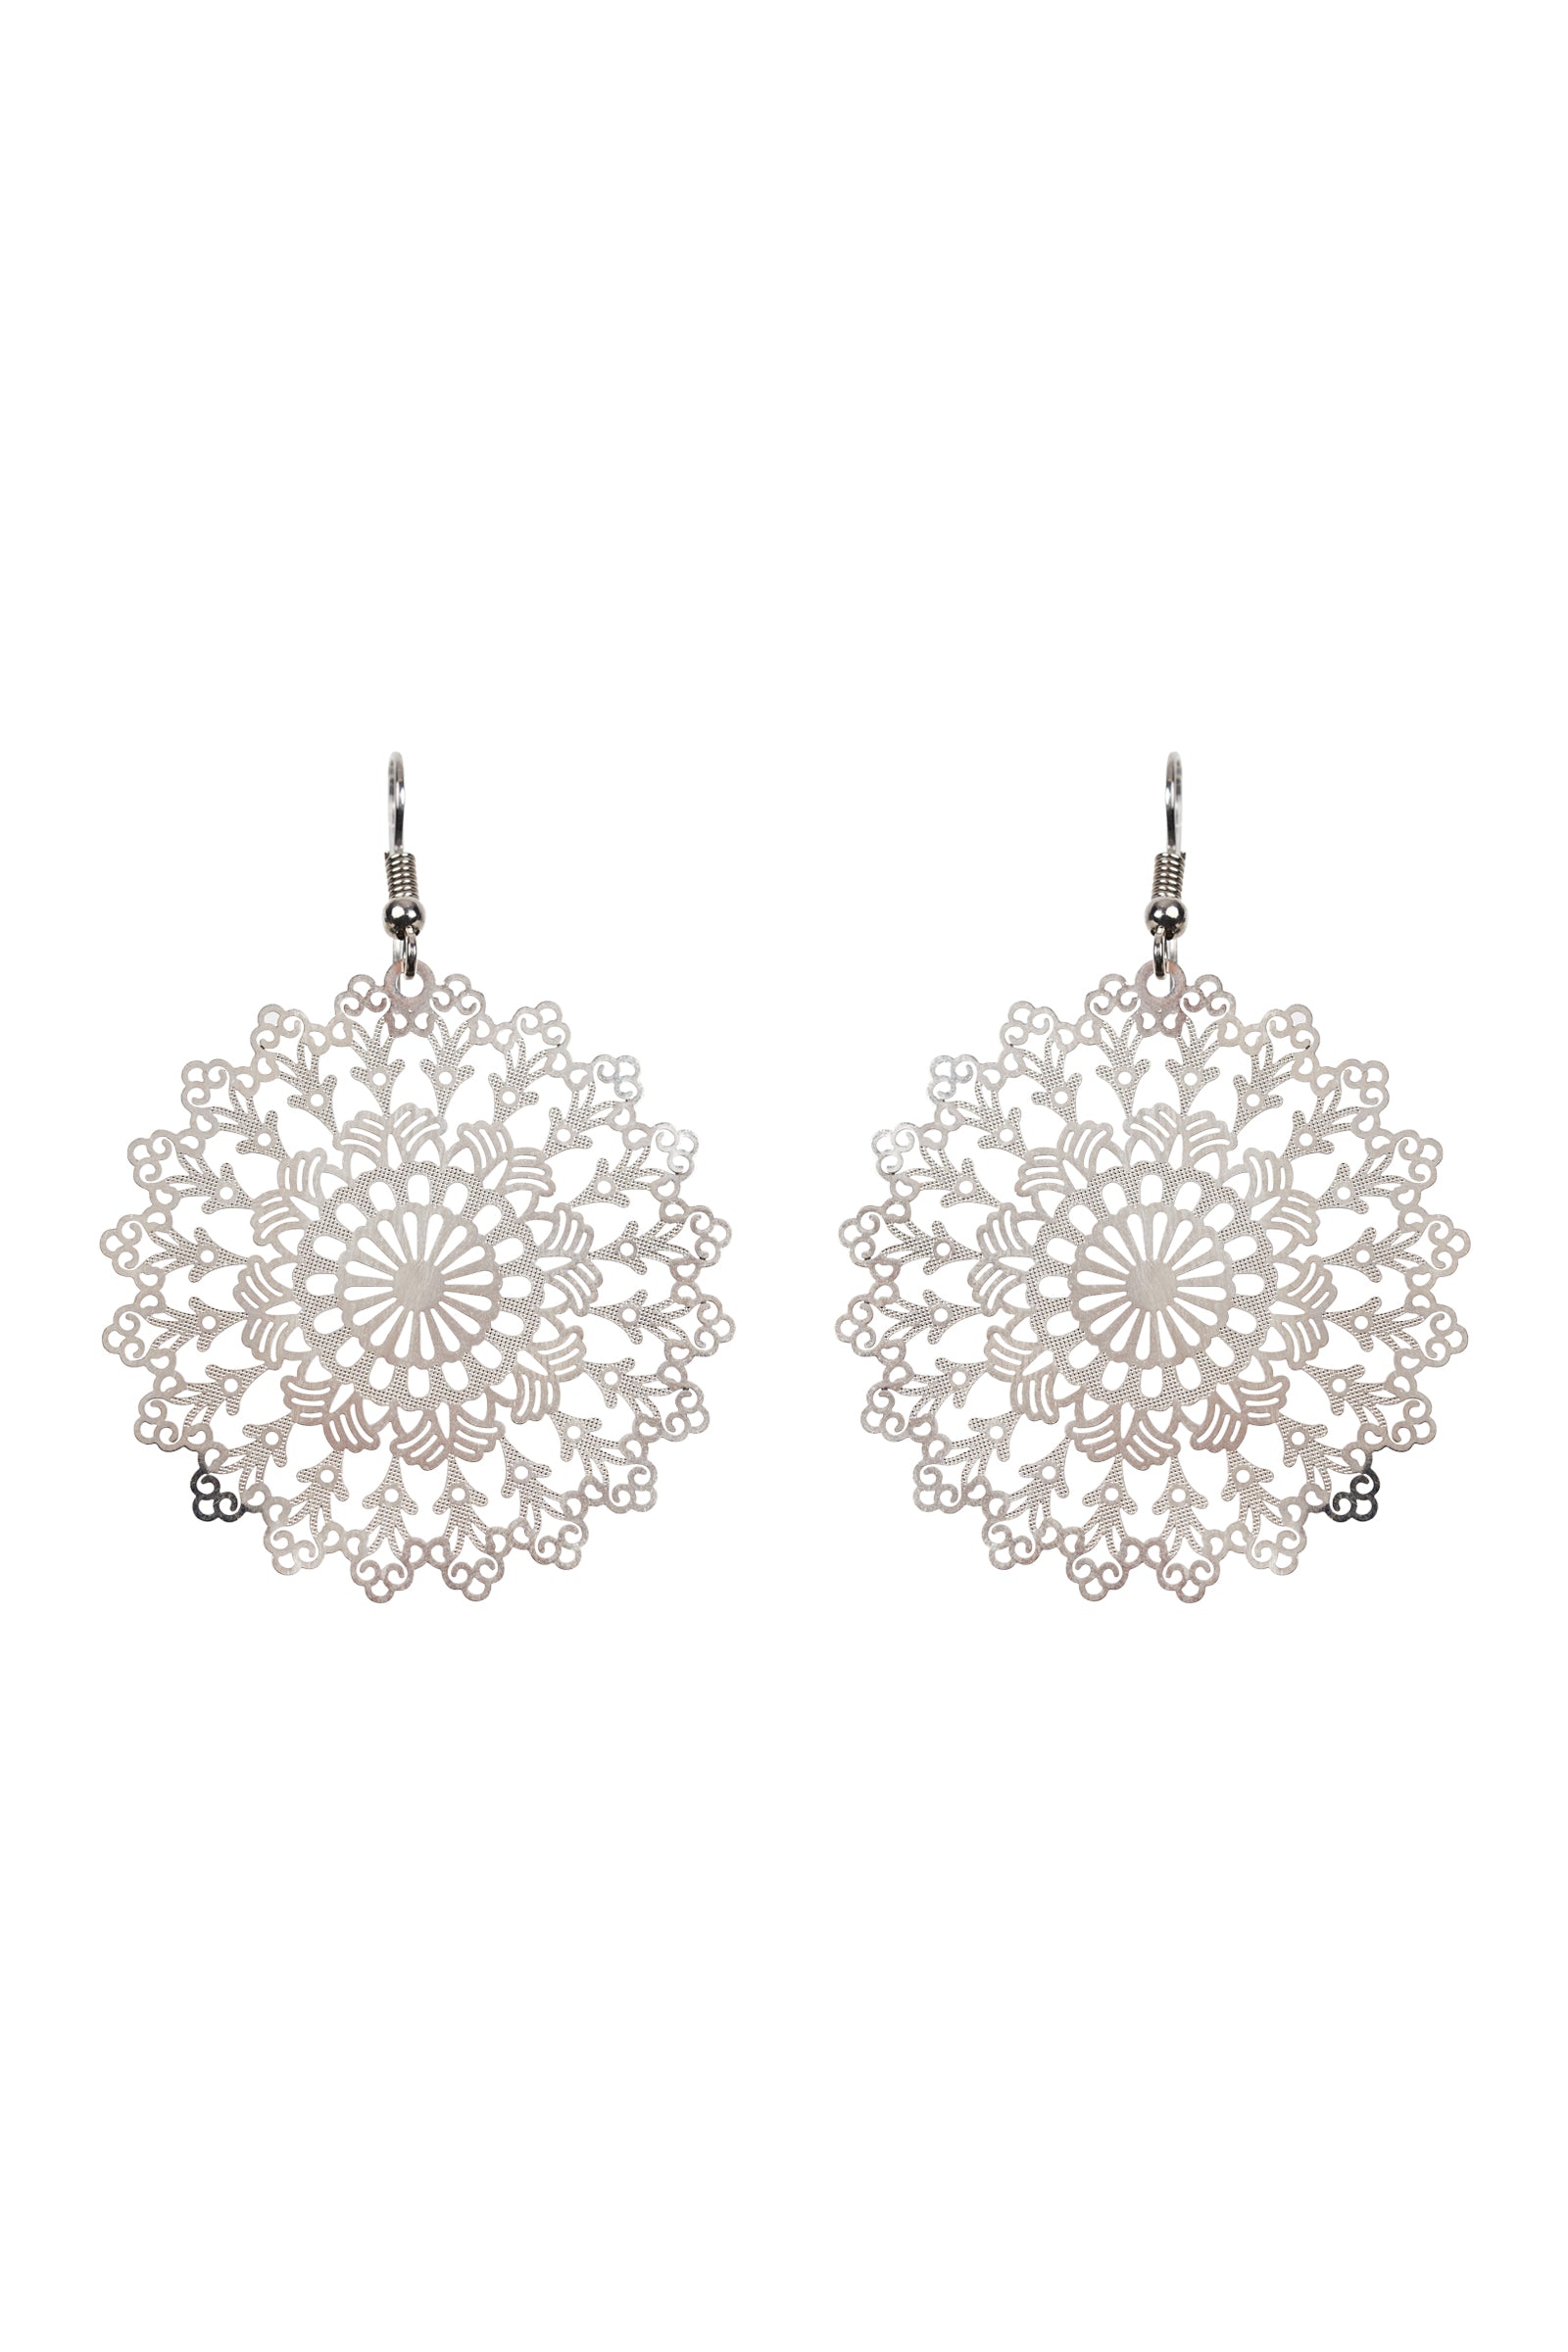 Irula Mandala Earring - Silver - eb&ive Earring